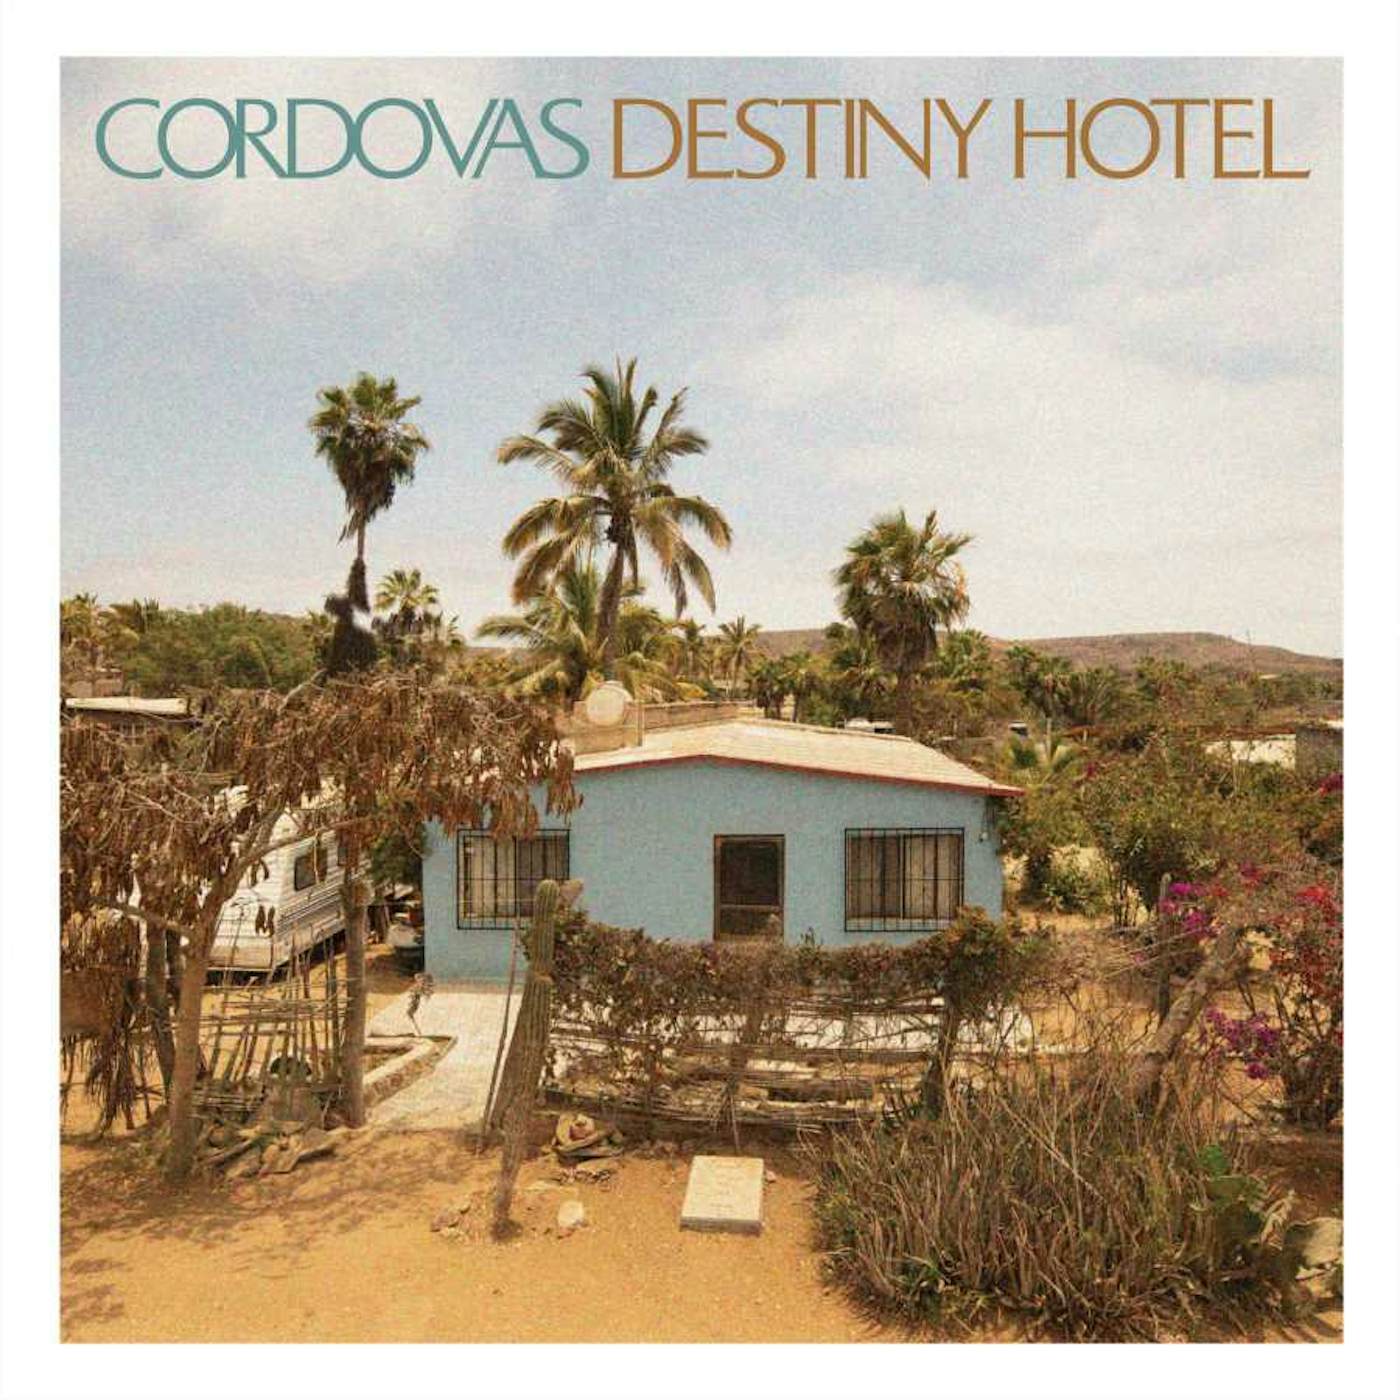 Cordovas DESTINY HOTEL (BROWN VINYL) Vinyl Record